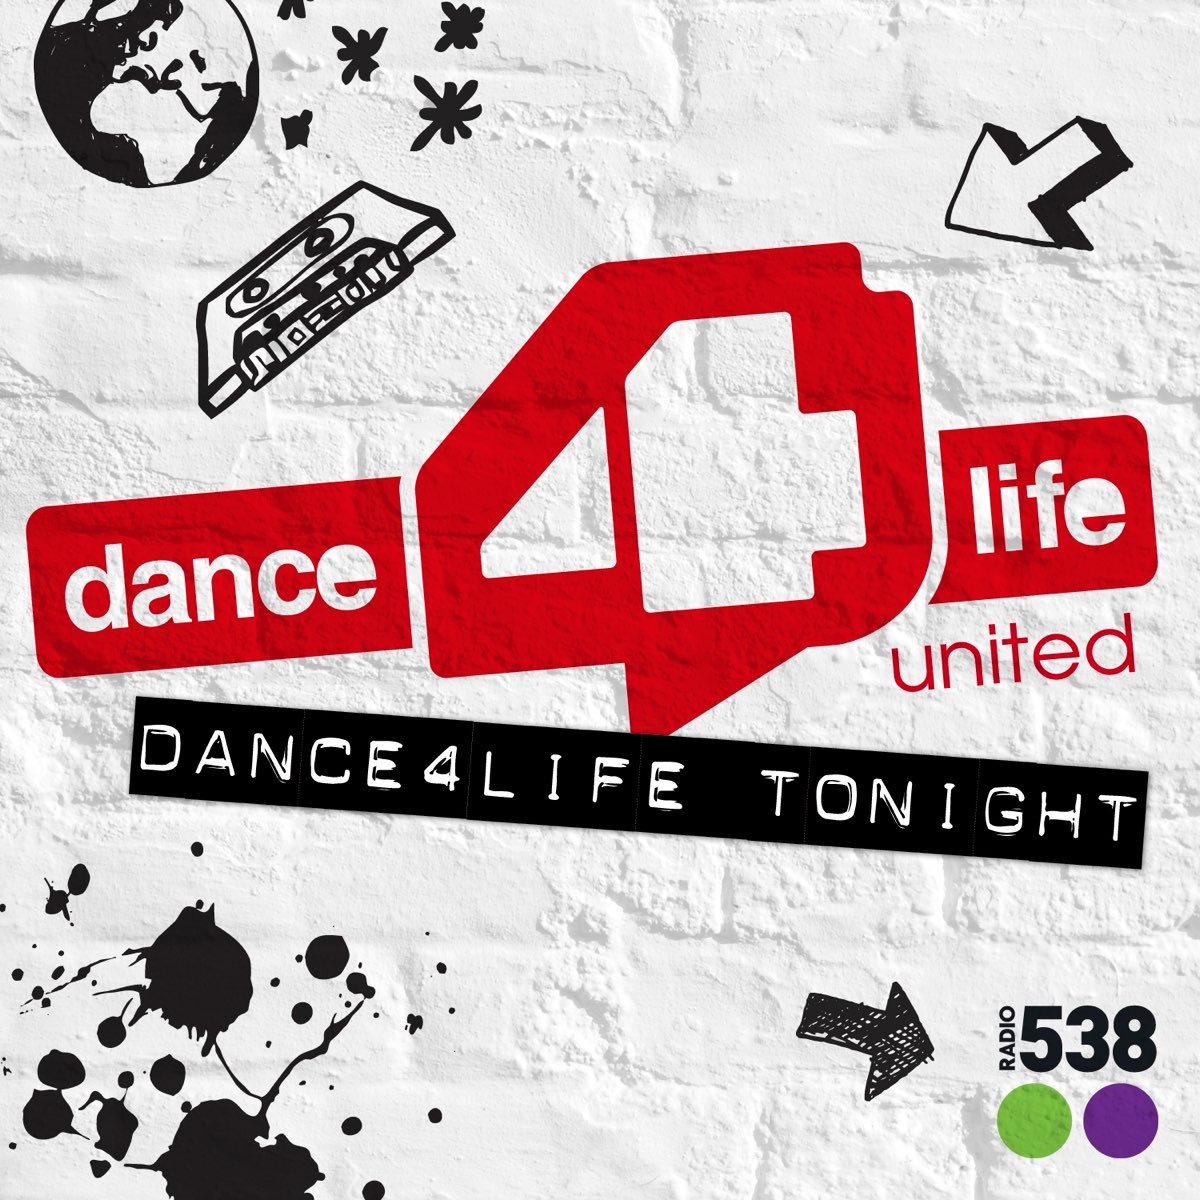 Dance4life Muscot. Dance for Life 4. Tiesto dance4life.